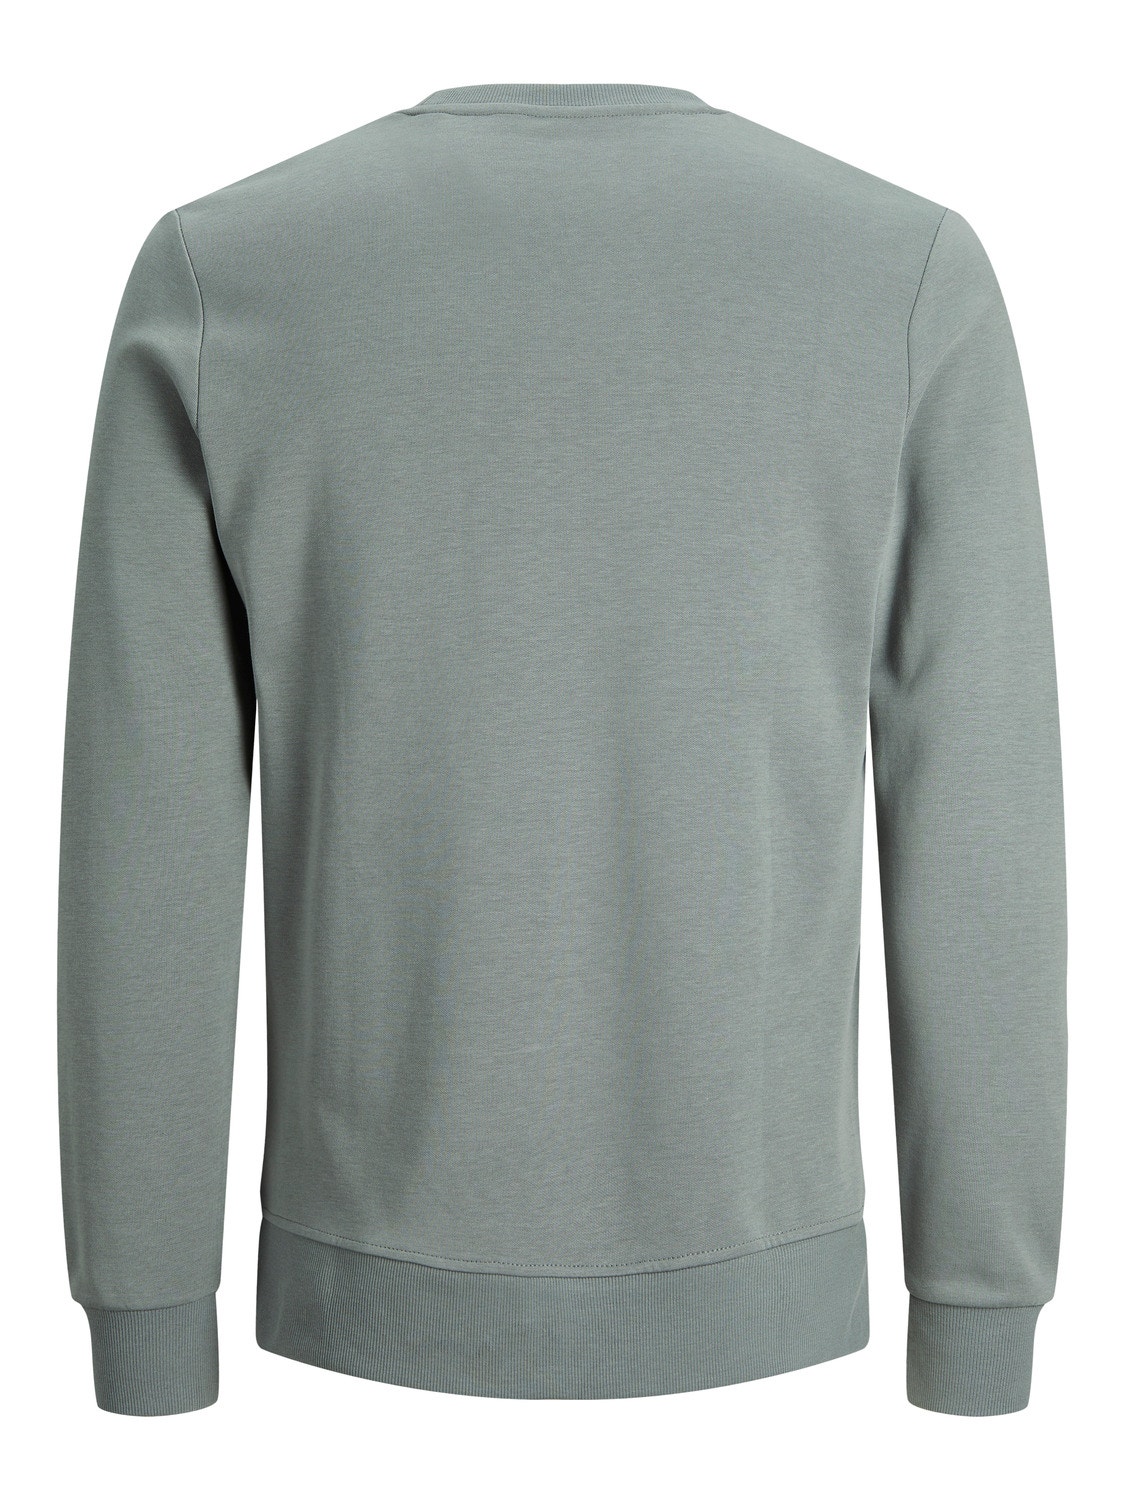 Jack & Jones Plain Crew neck Sweatshirt -Sedona Sage - 12181903